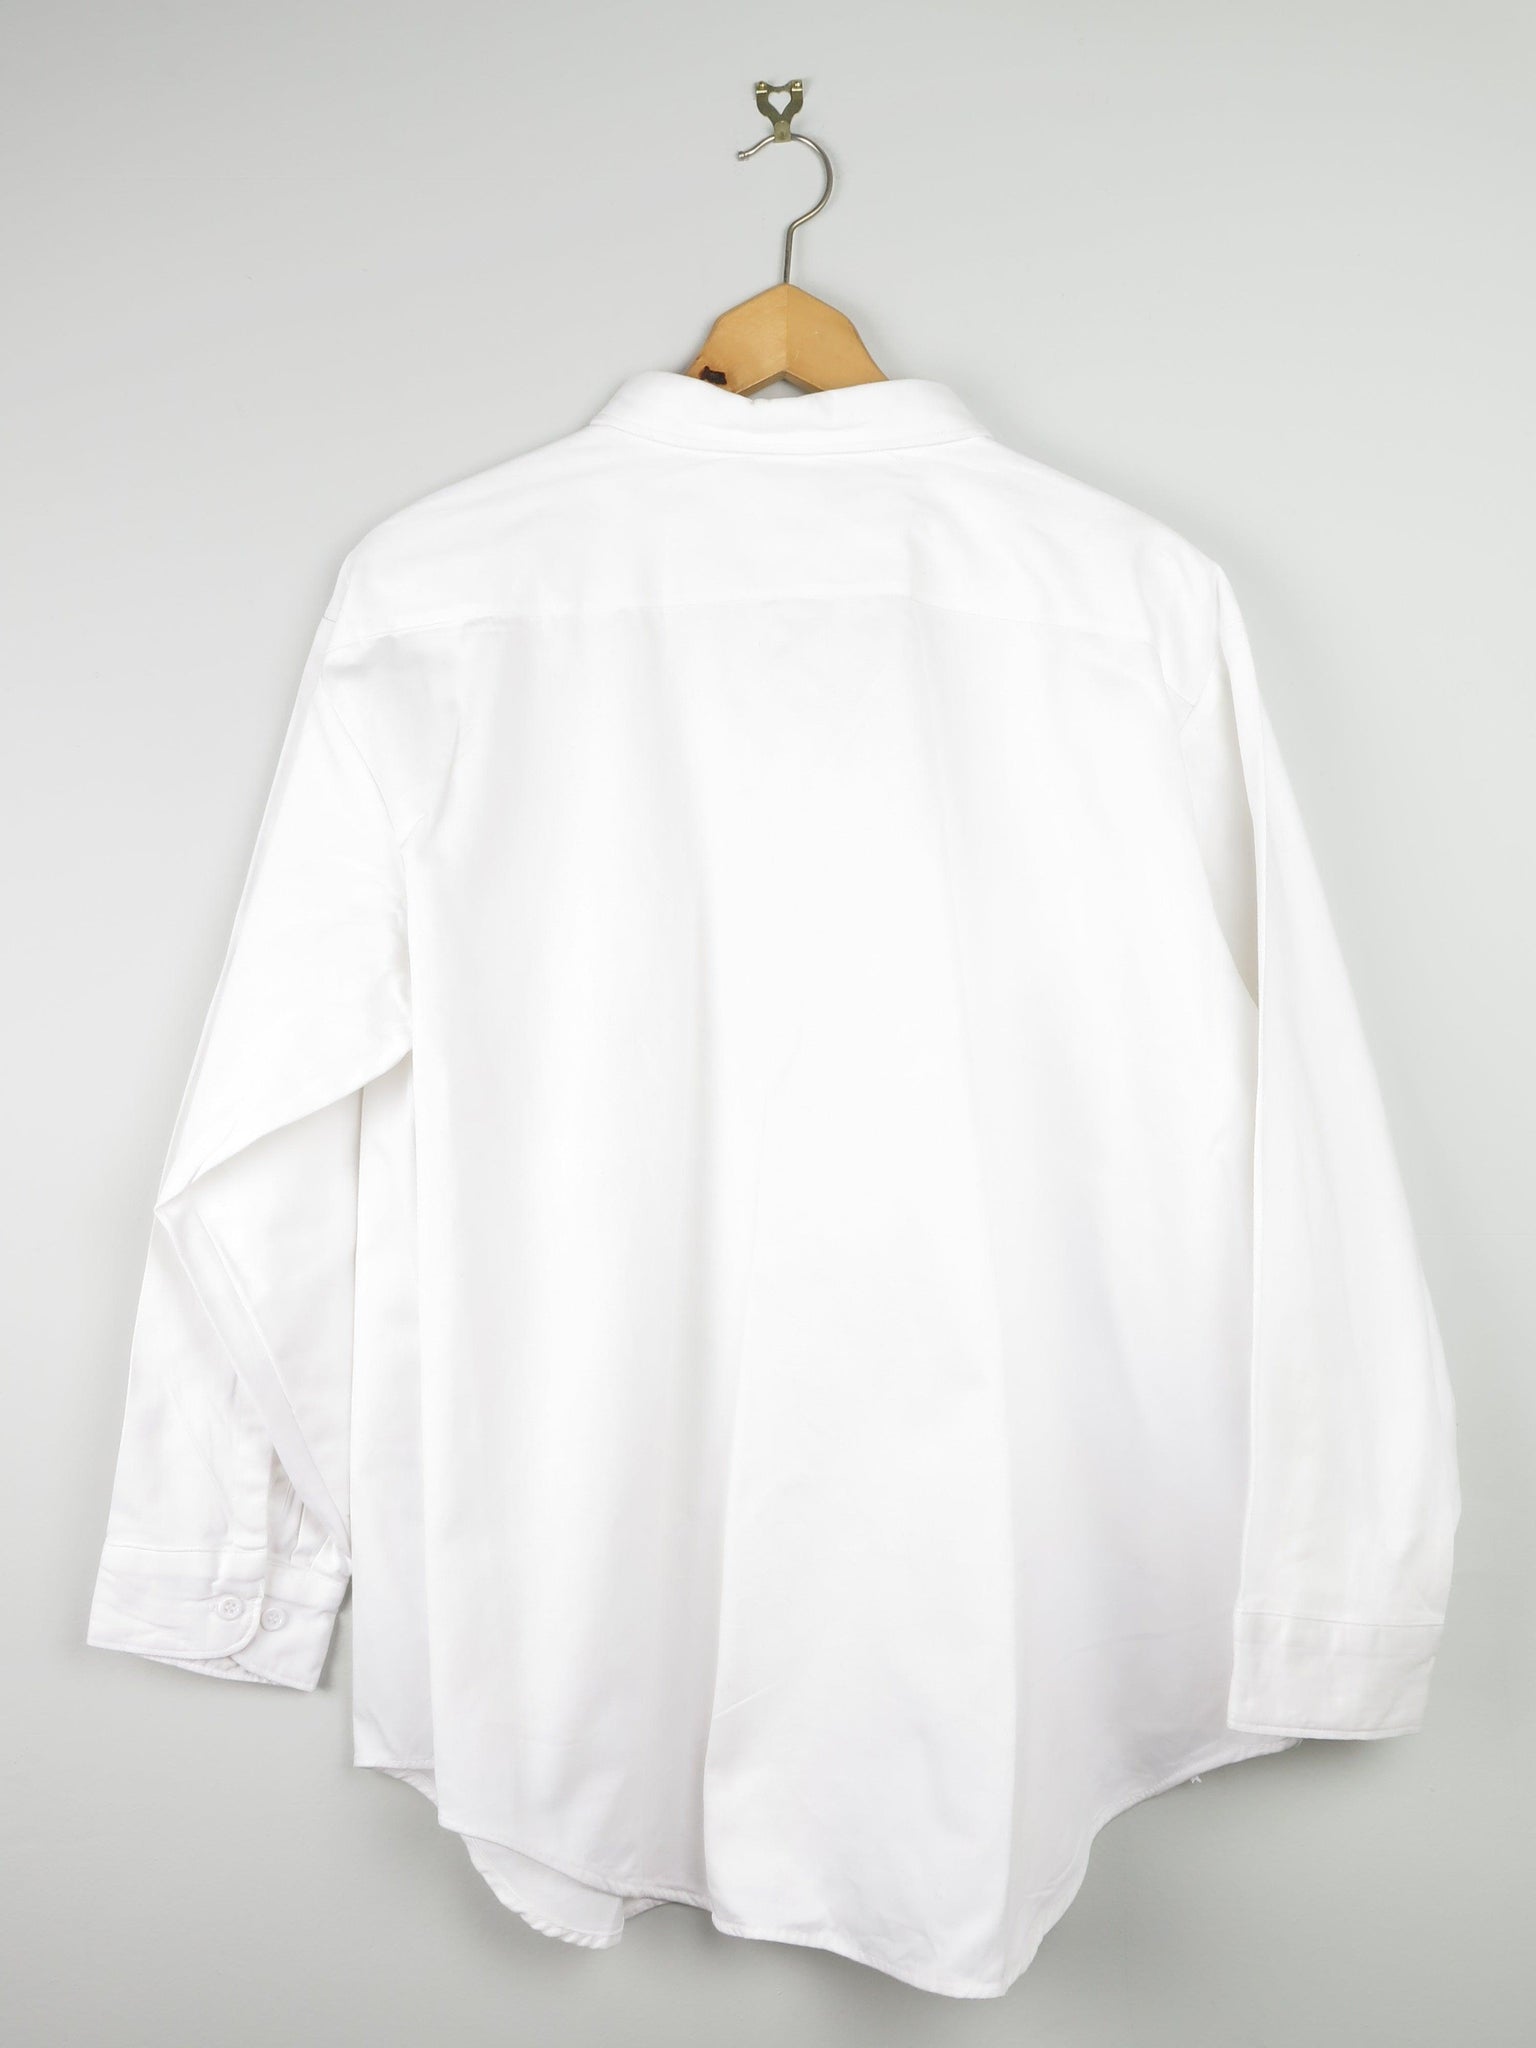 Men's Lovely Quality  Off White Shirt "Big Mac" Brand XL 17-17.5 - The Harlequin